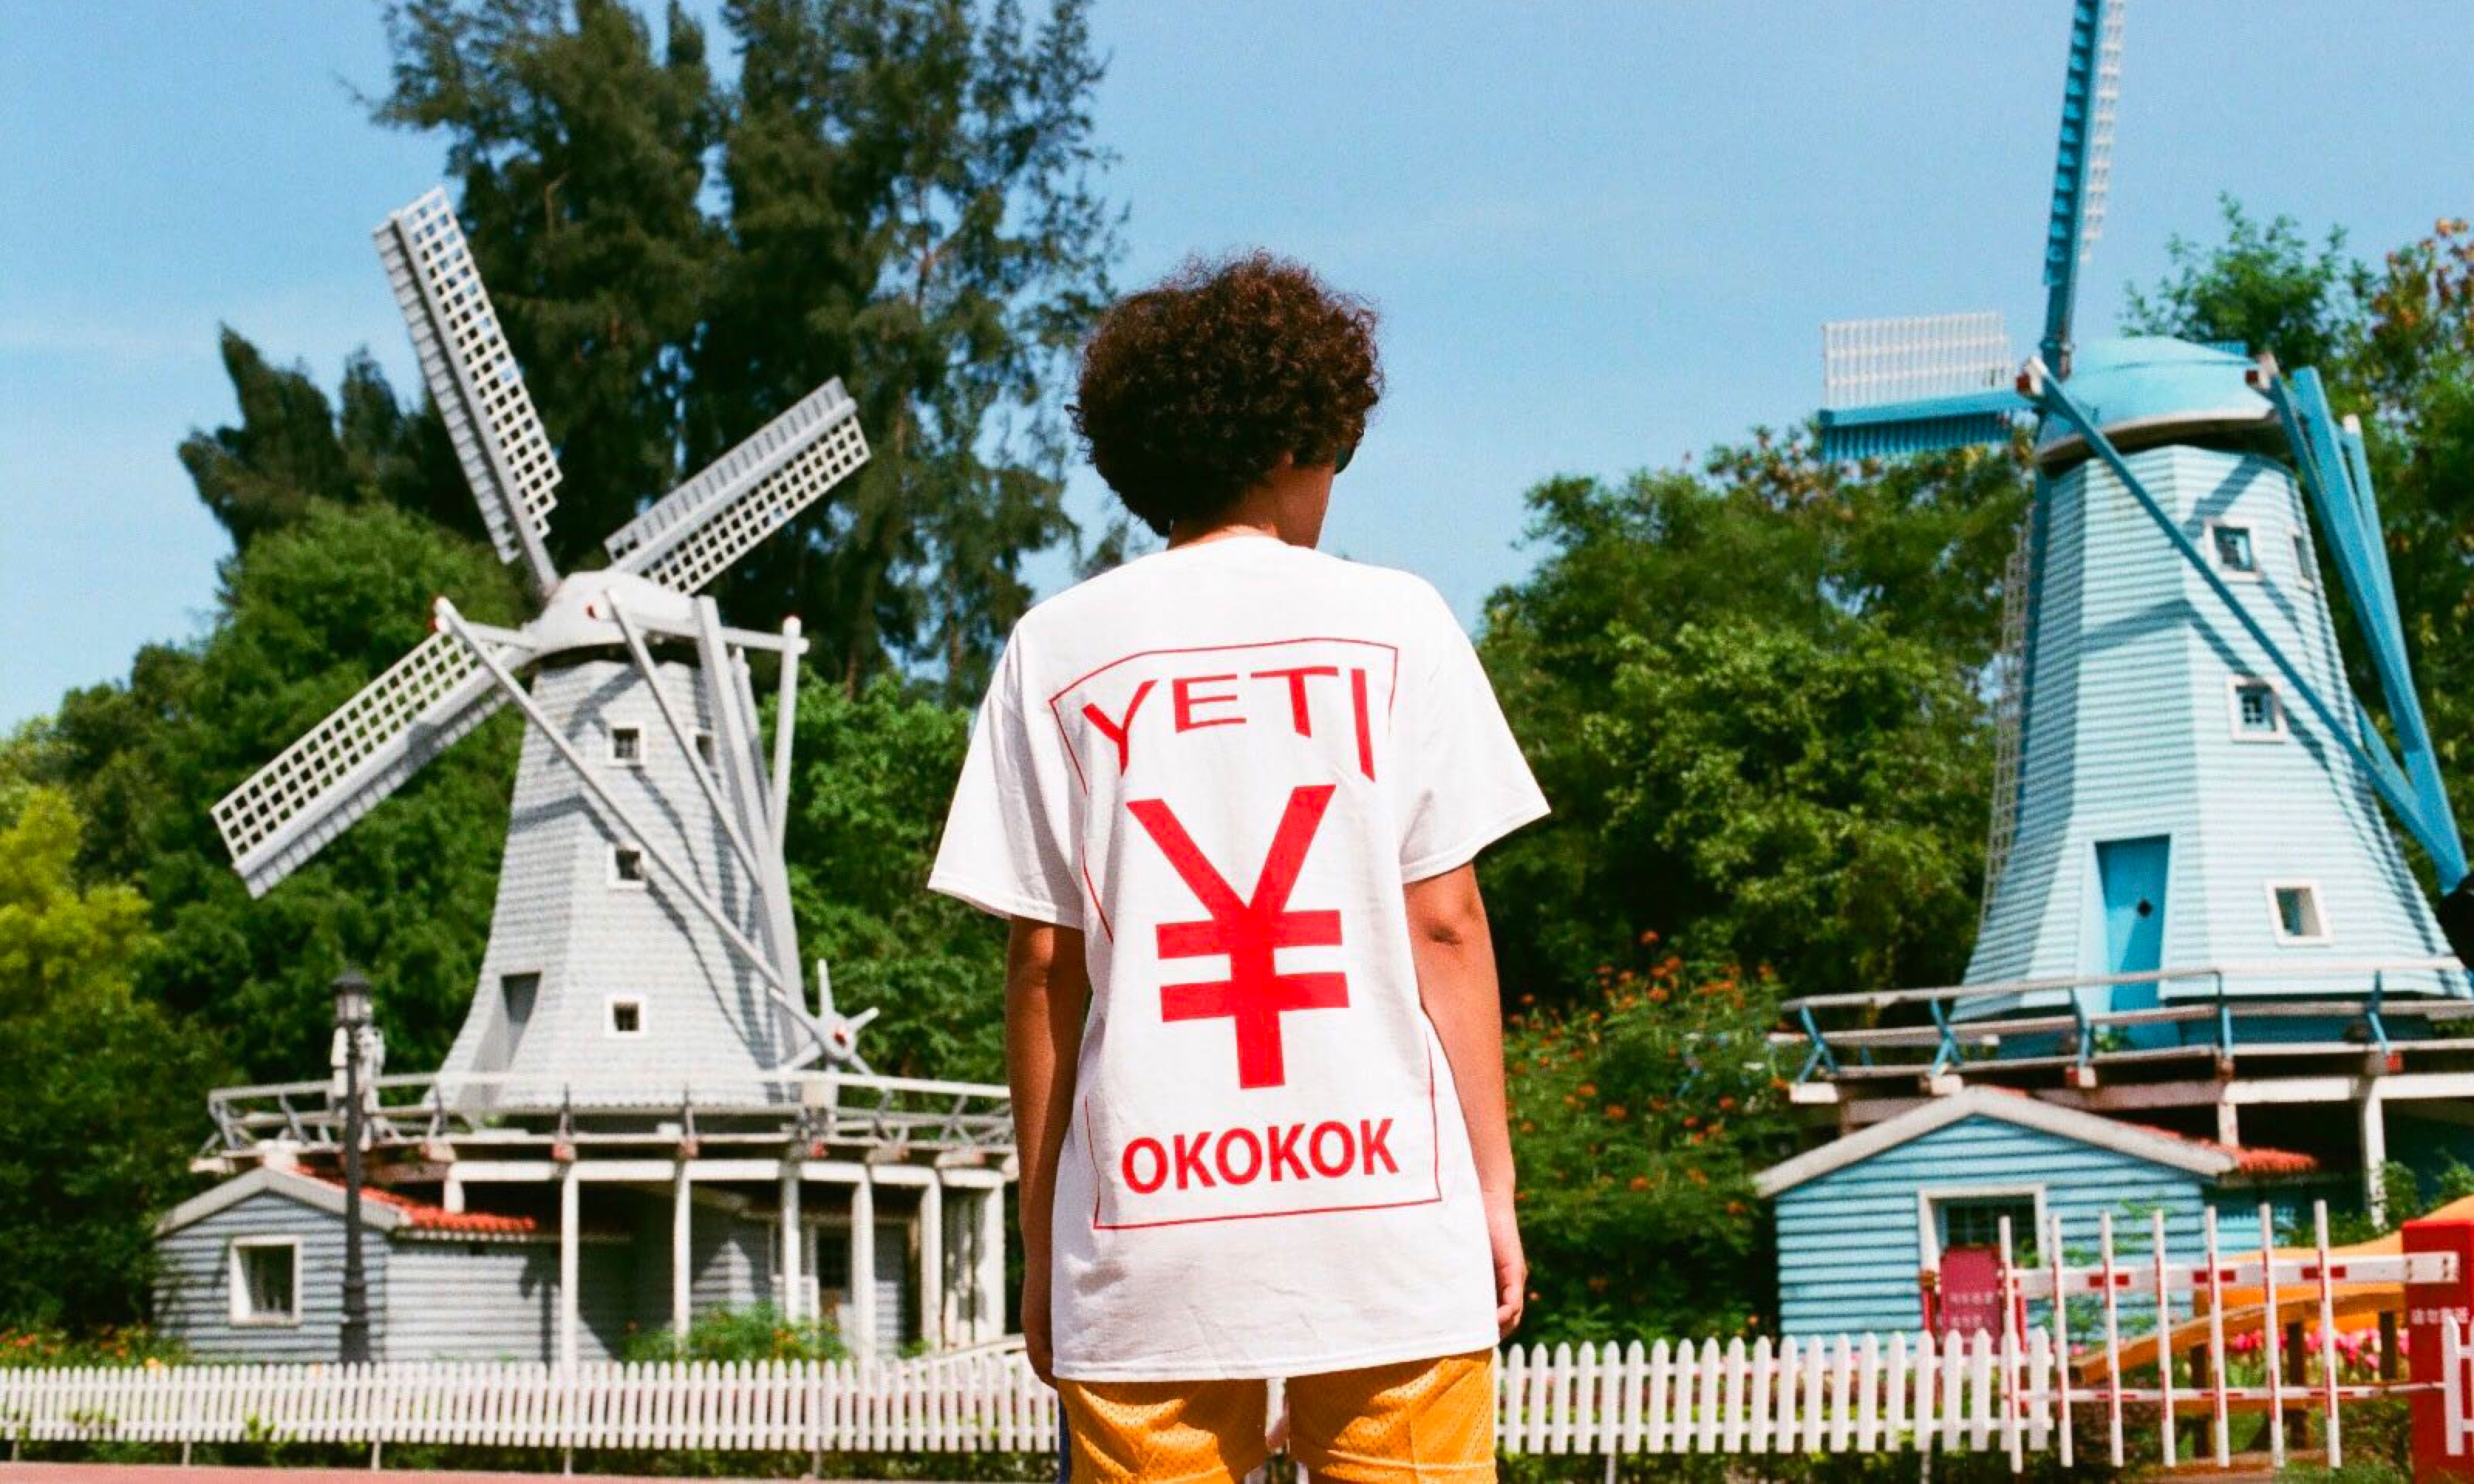 YETI OUT x OKOKOK 三周年纪念 T恤暨 Arkham 生日趴即将引爆沪上